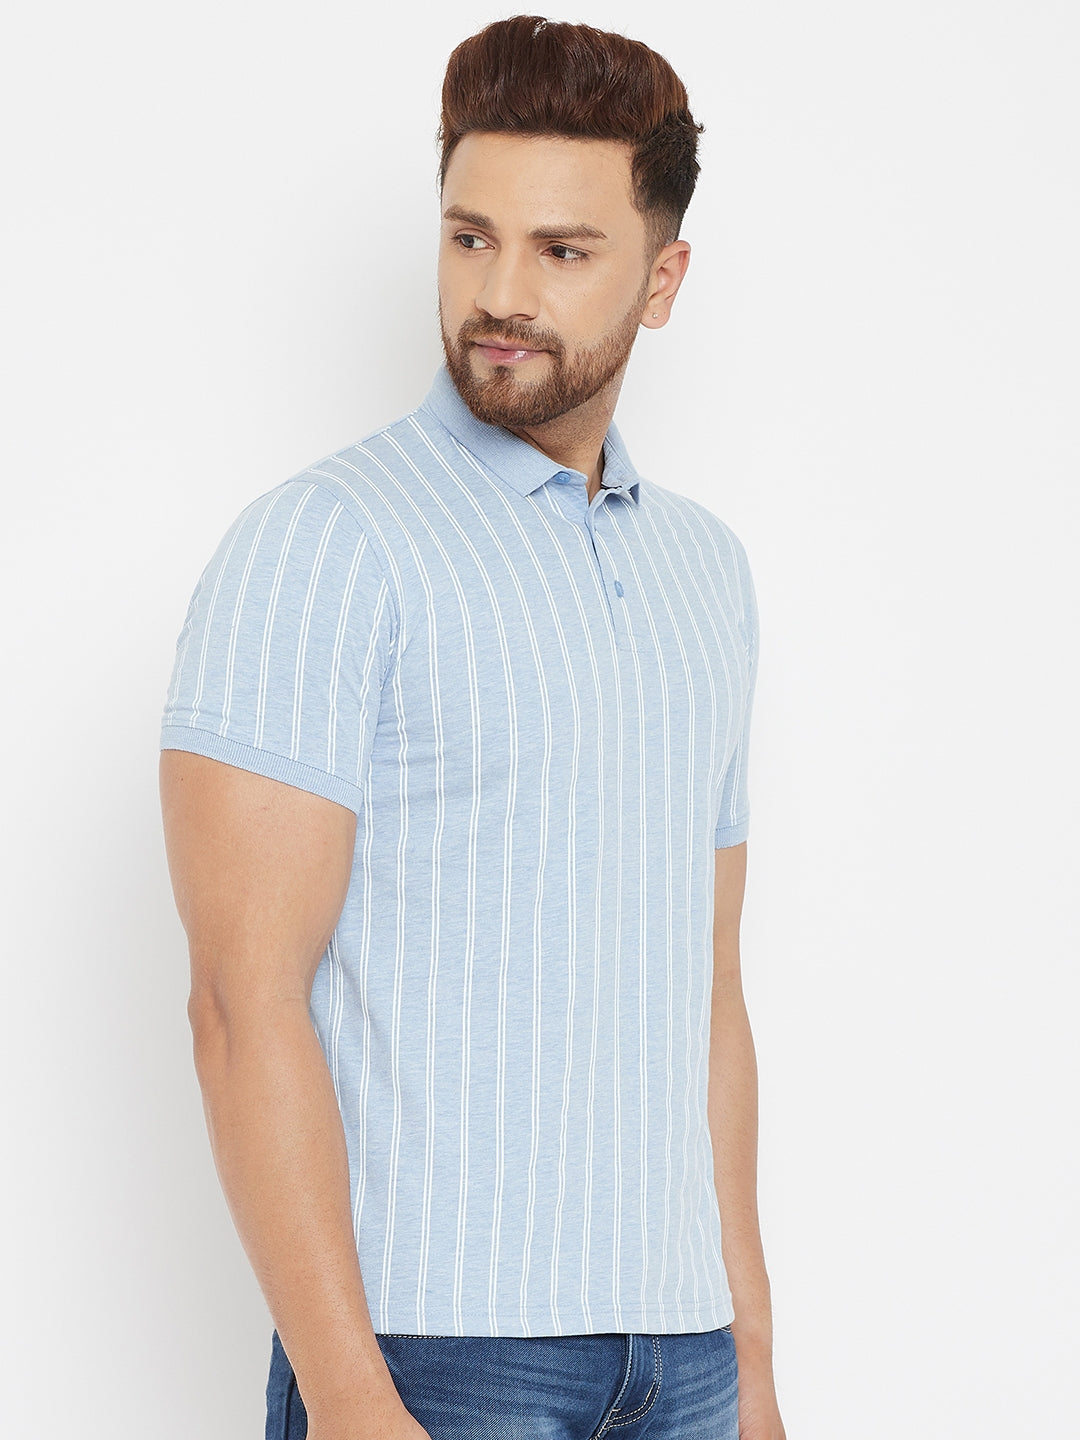 Blue Striped Polo T-Shirt - Men T-Shirts